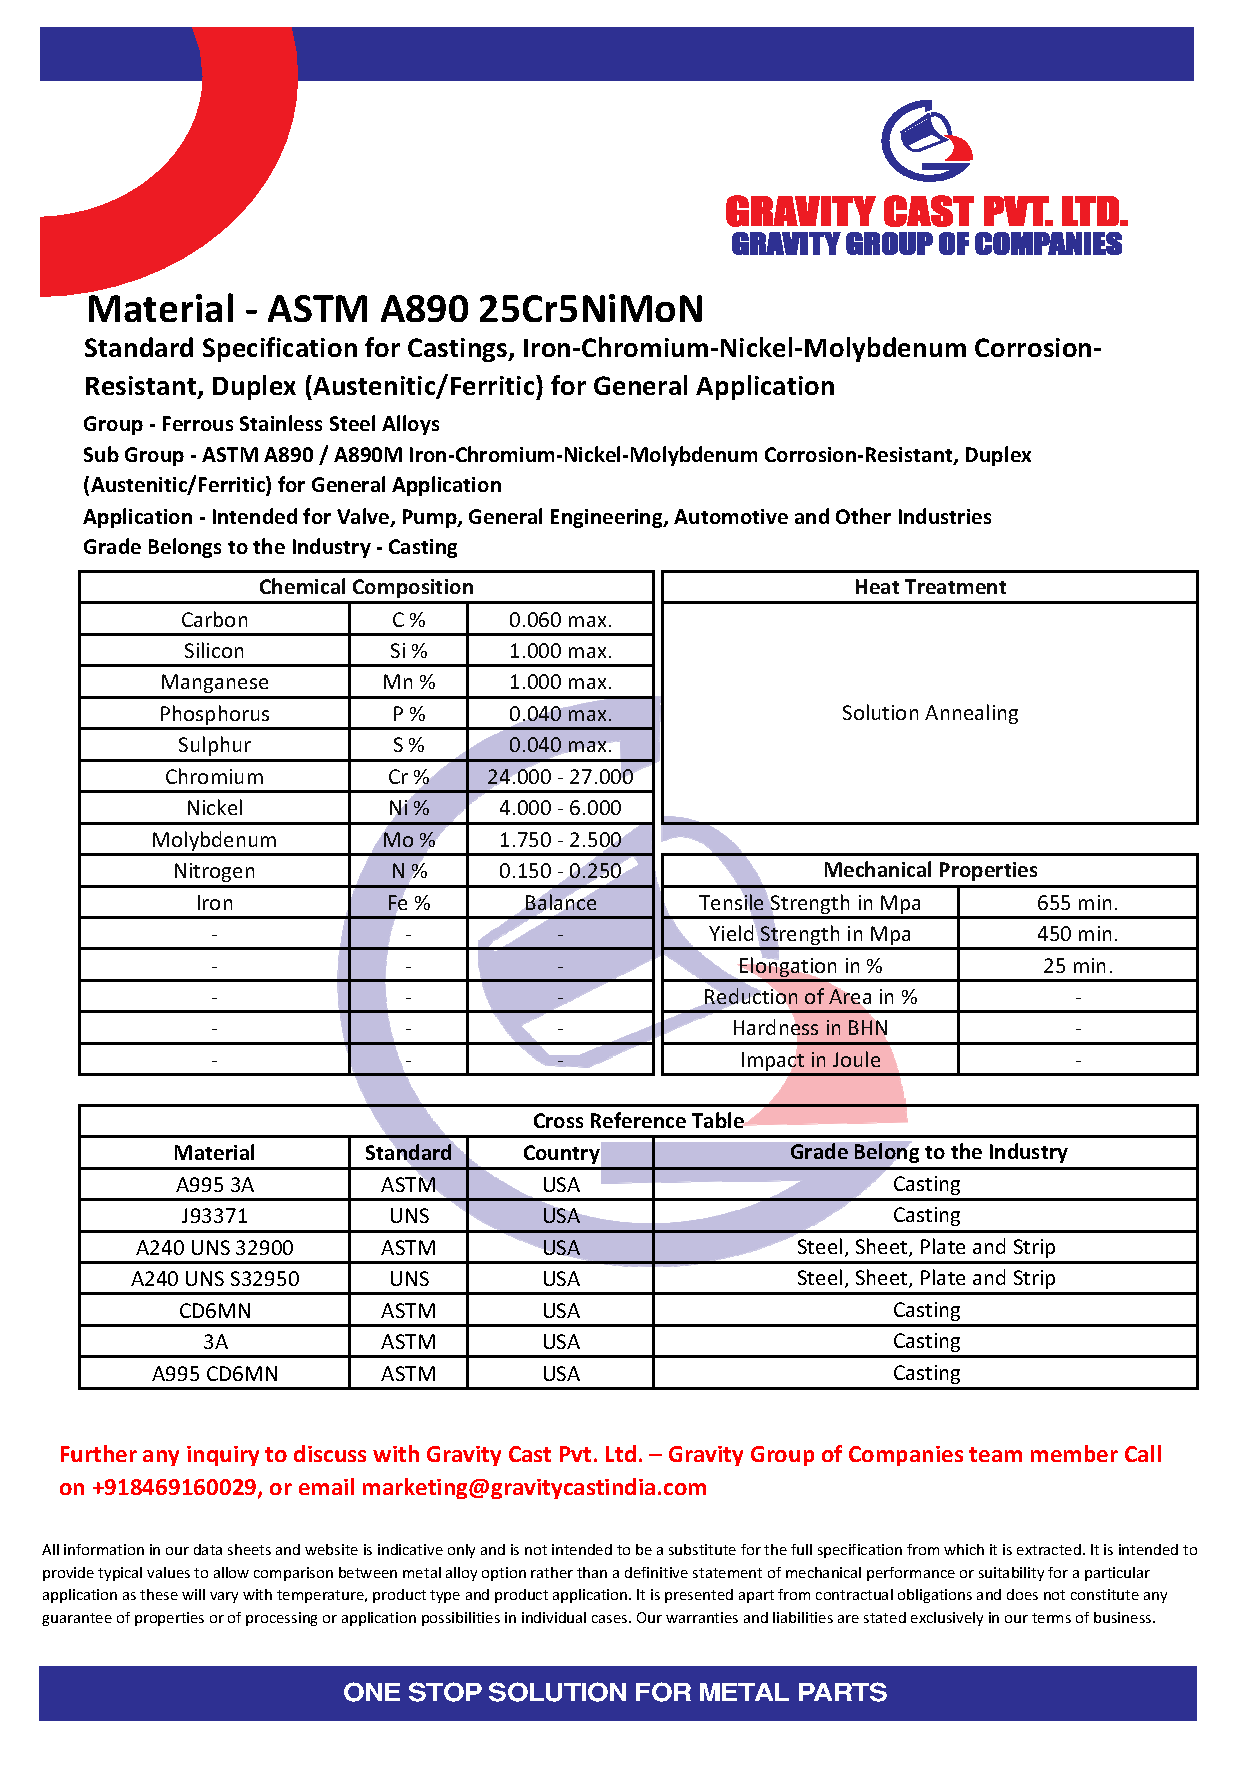 ASTM A890 25Cr5NiMoN.pdf